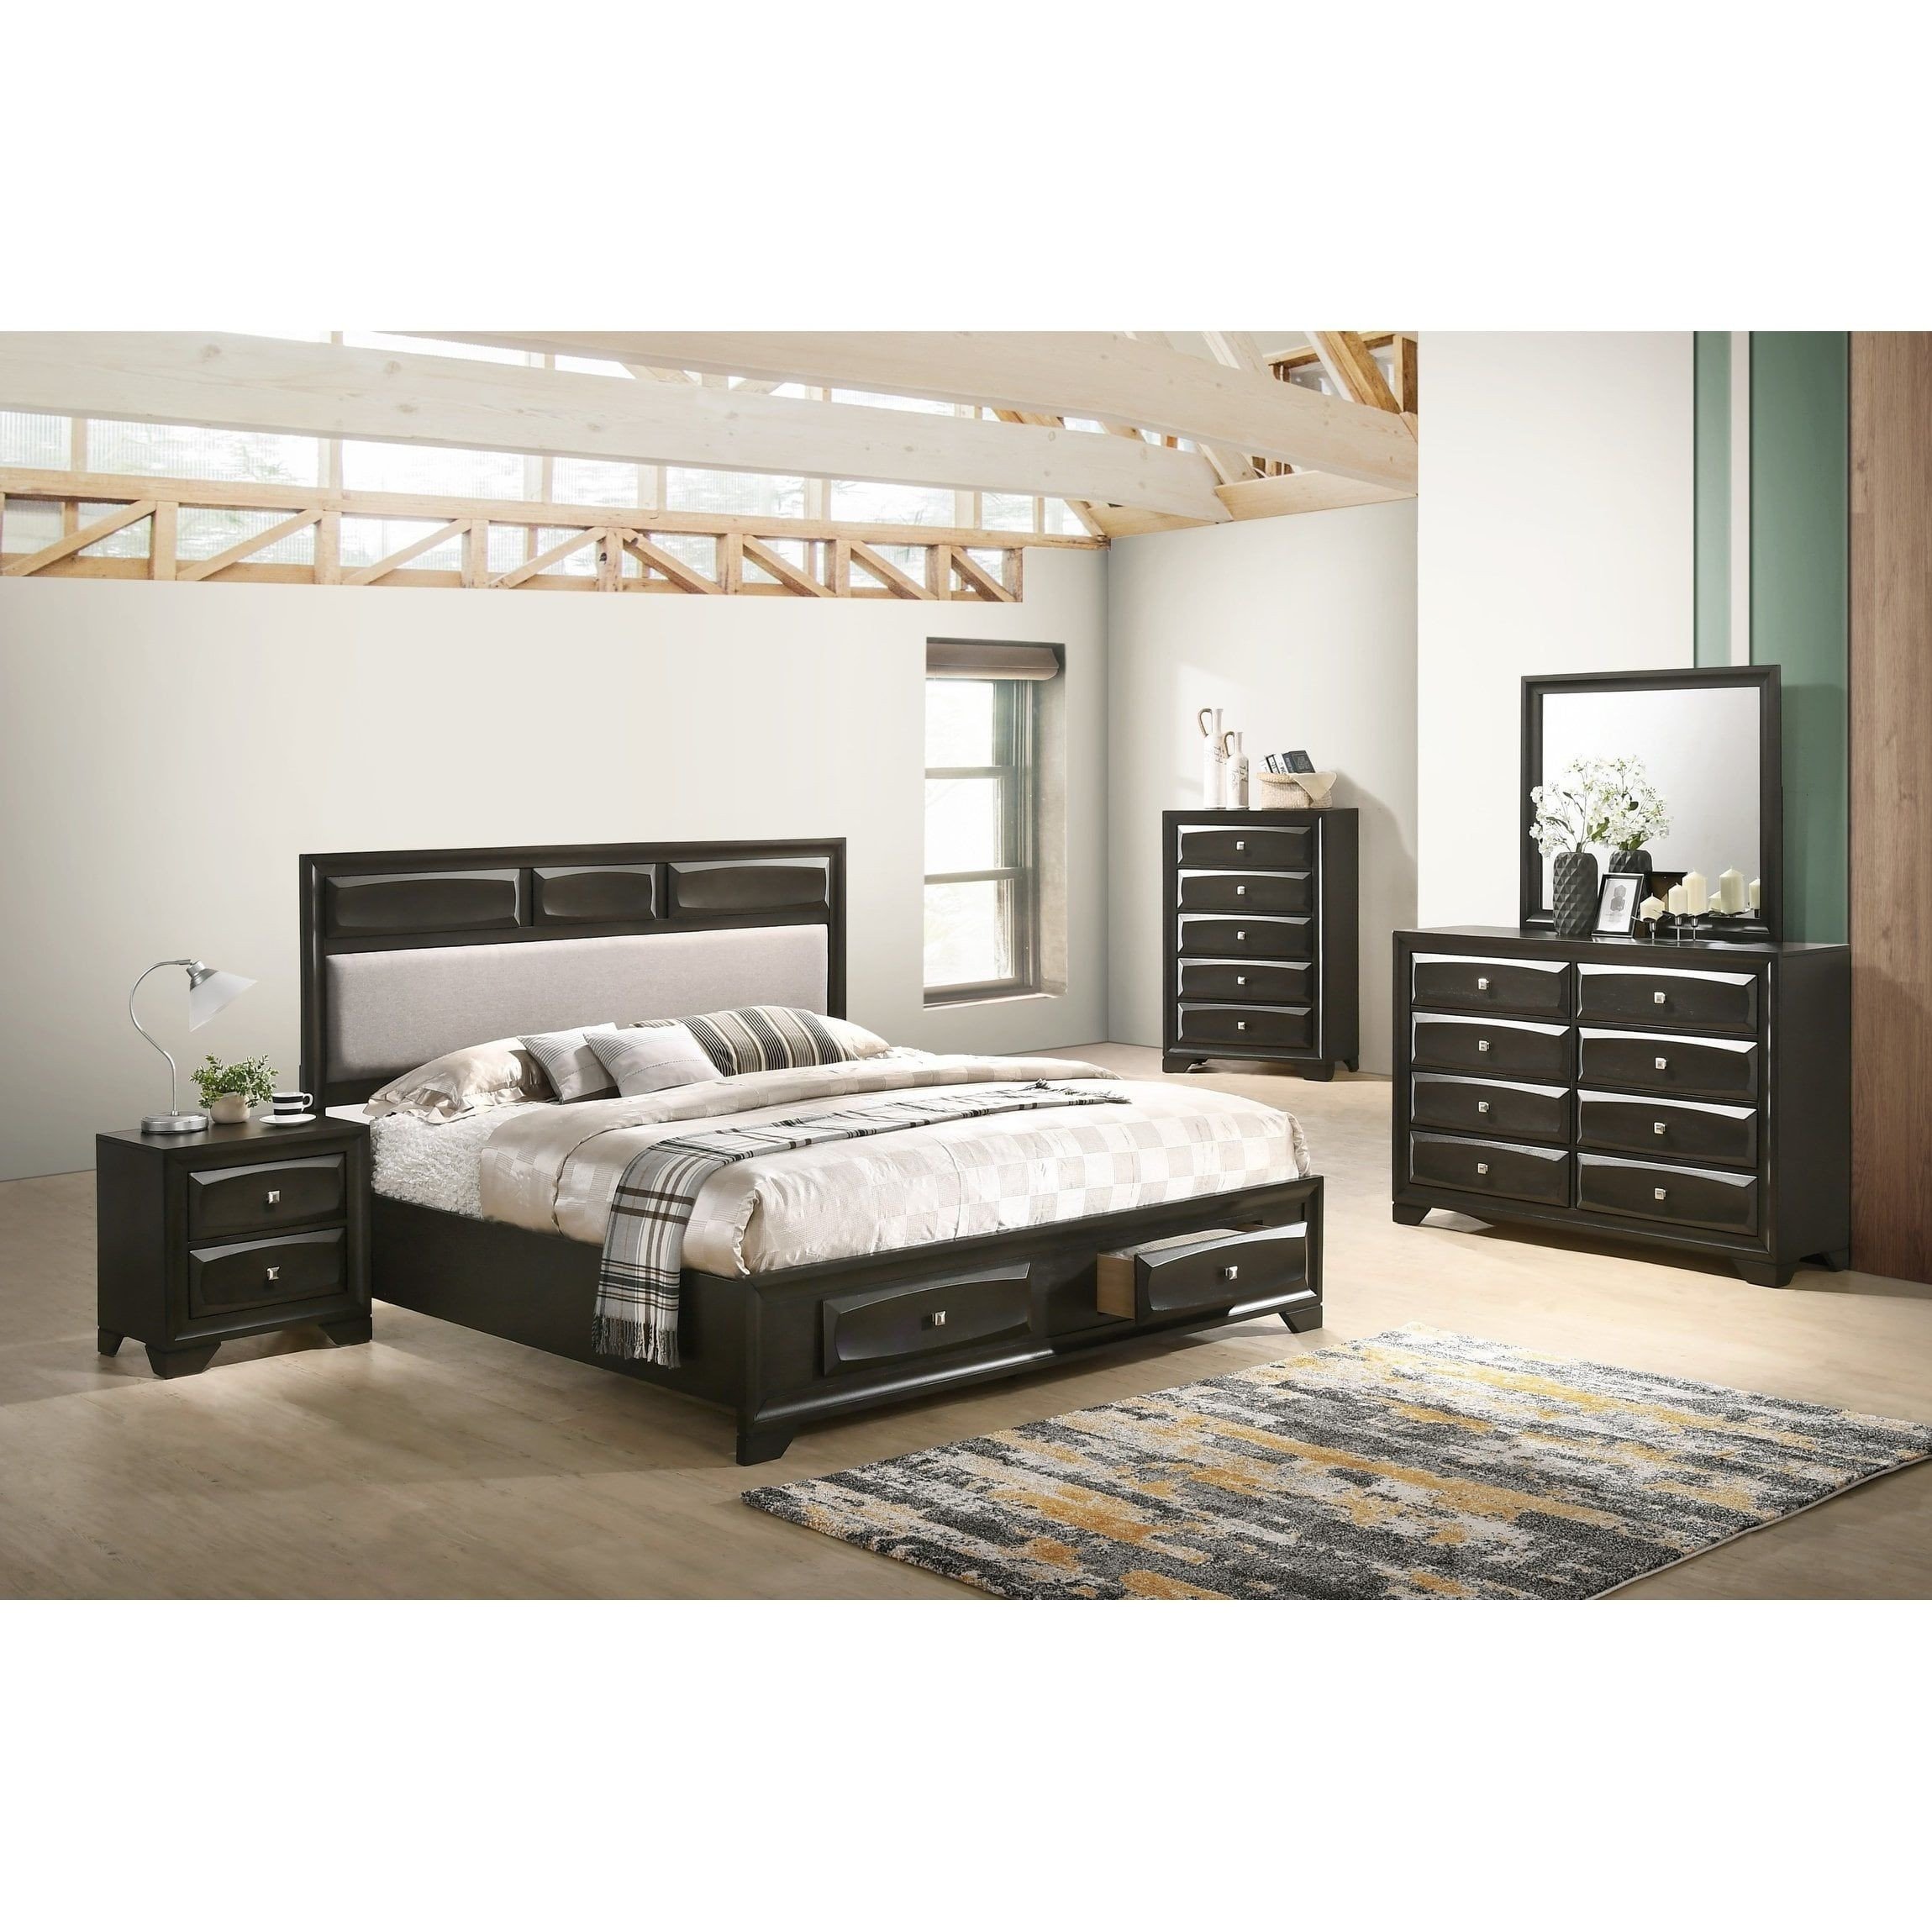 King Size Bedroom Suites Best Of Oakland Antique Gray Finish Wood 5 Pc King Size Bedroom Set